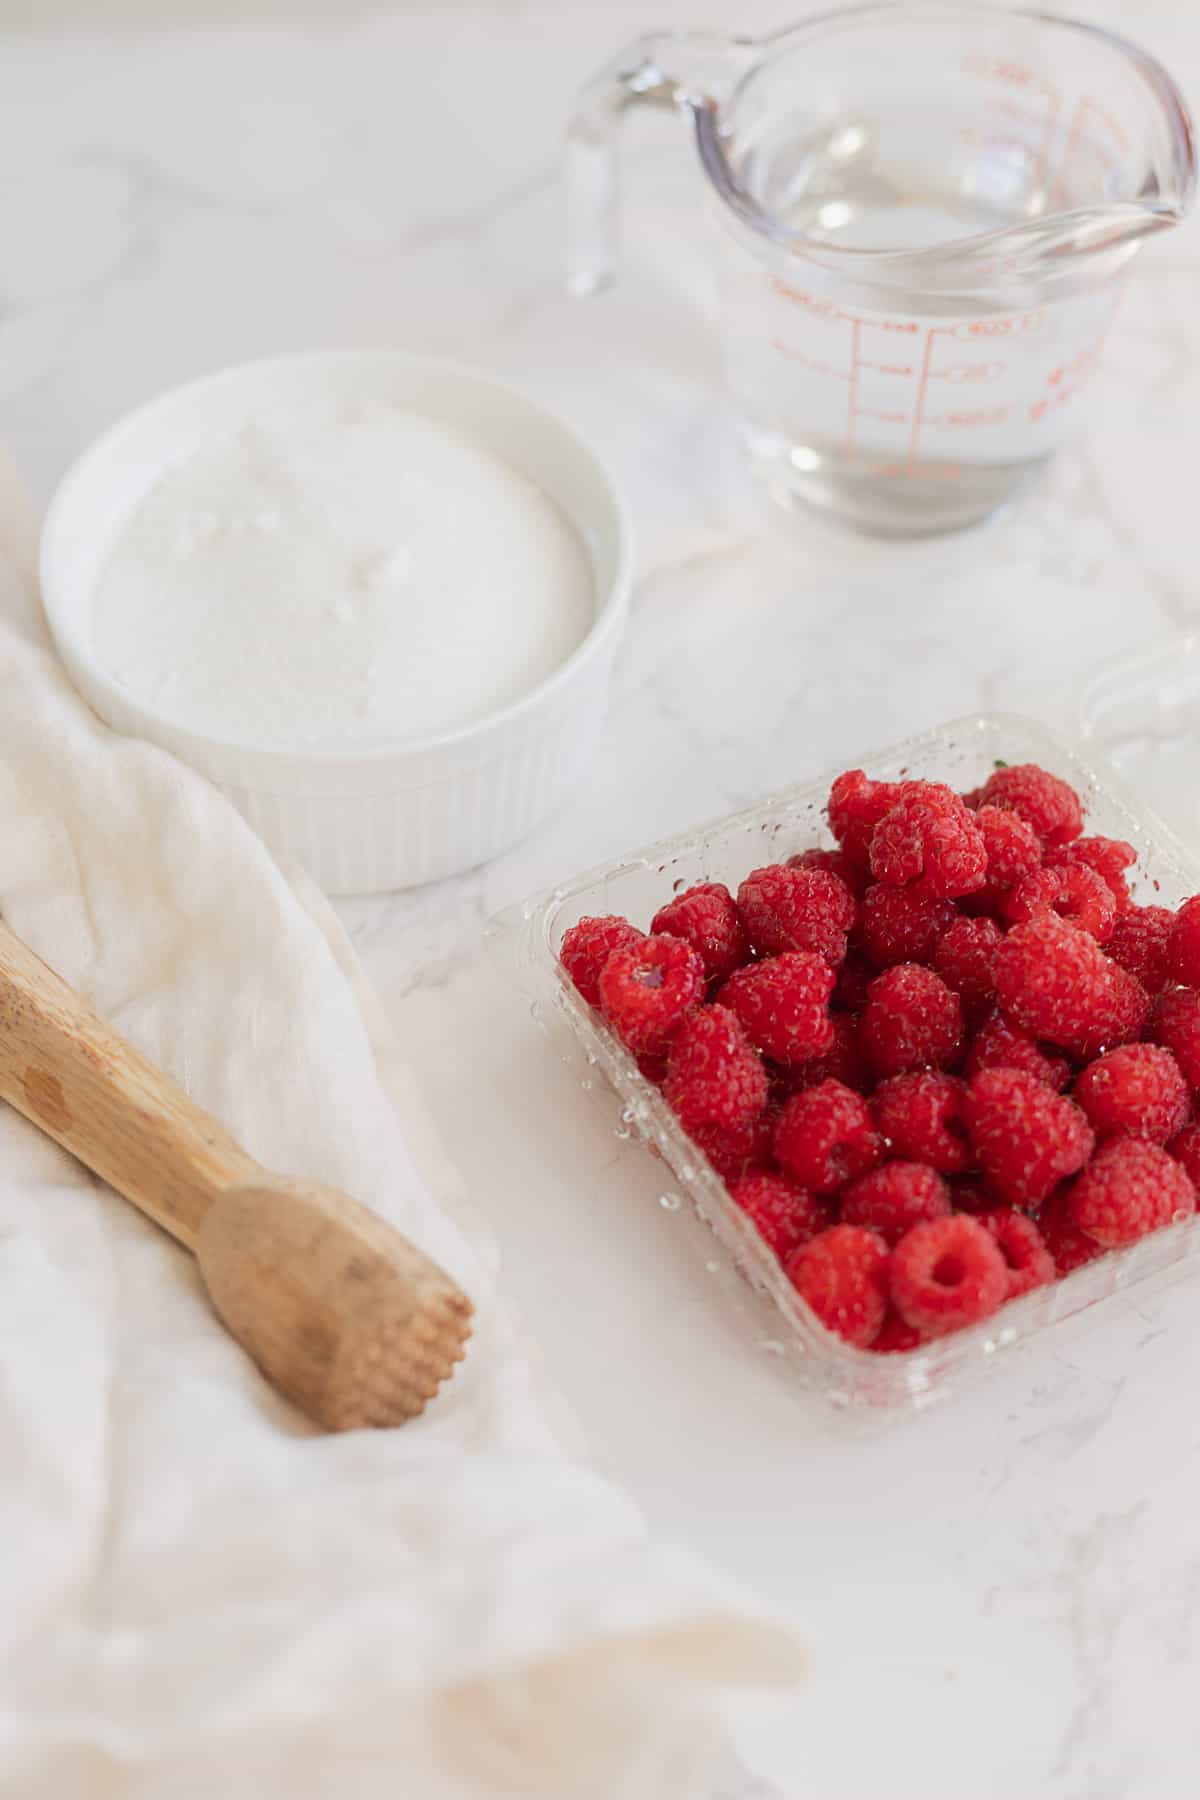 ingredients for raspberry simple syrup: sugar, water, and raspberries